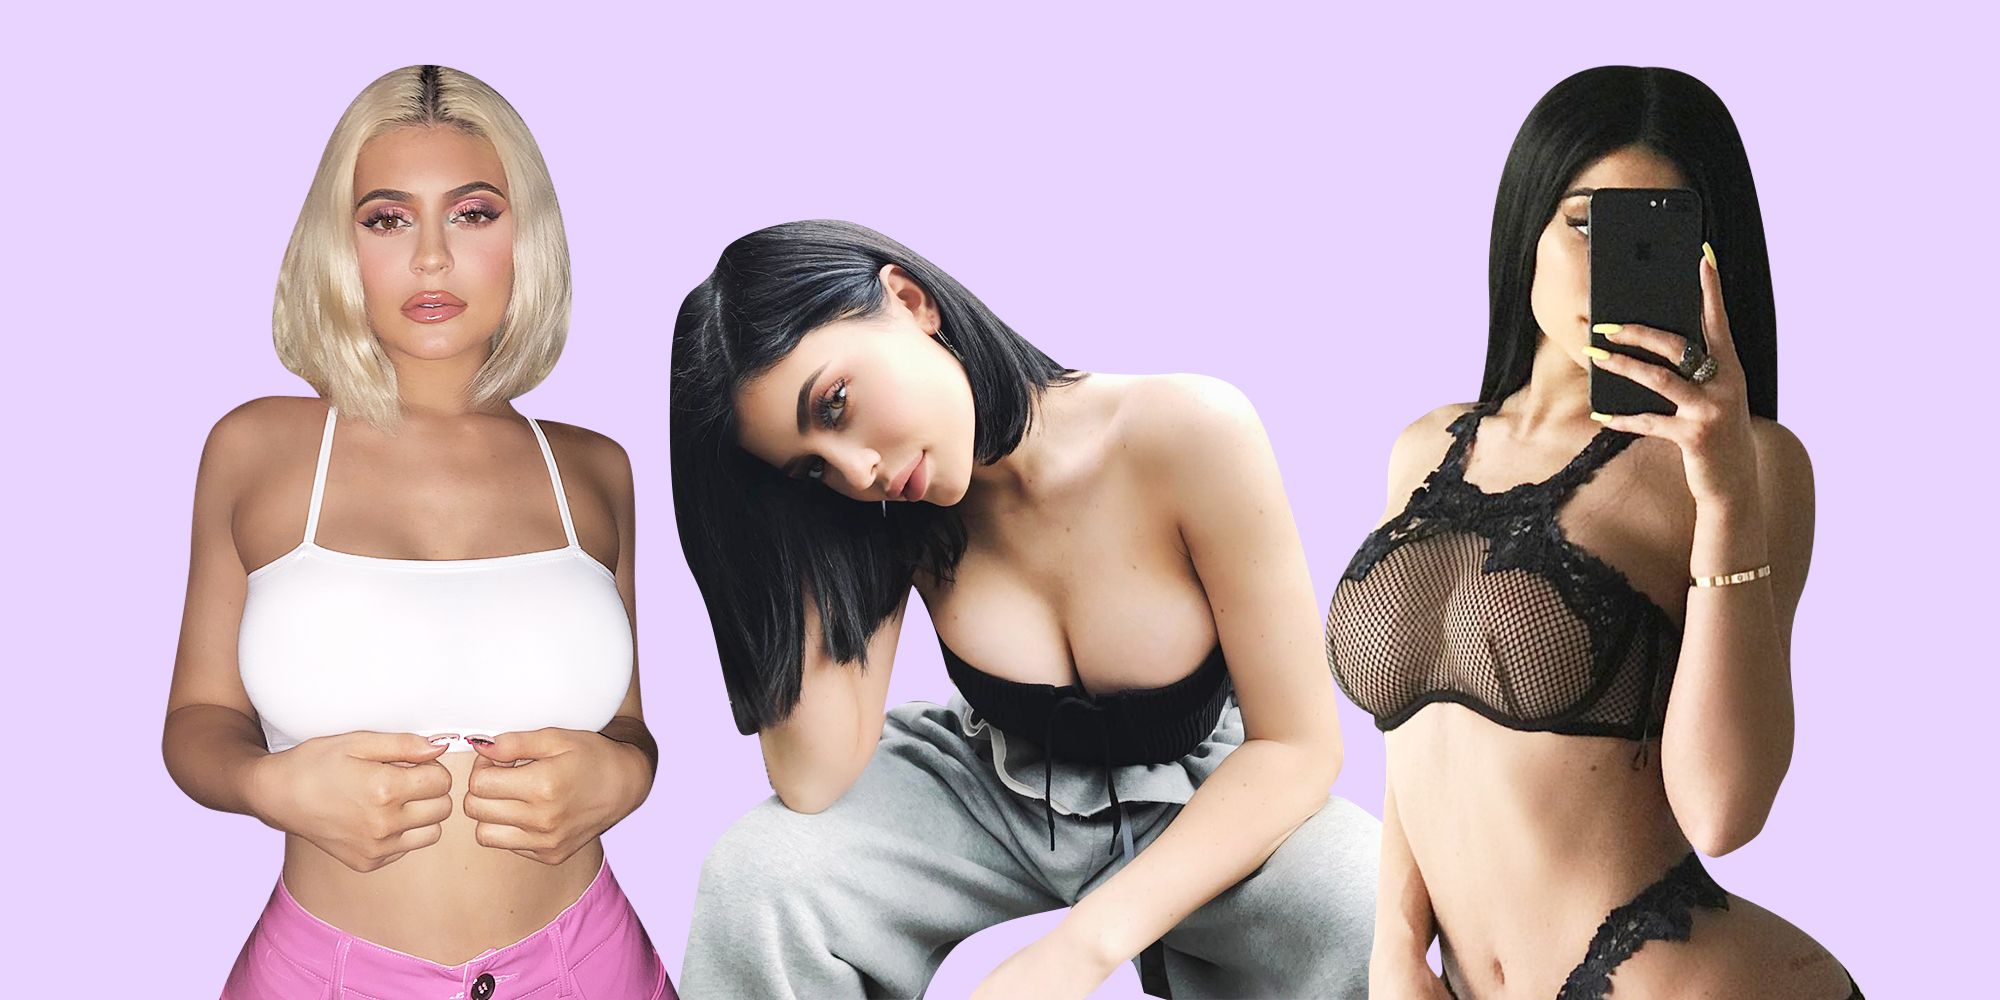 19 Photos of Kylie Jenner's Boobs - Kylie Jenner's Boobs on Instagram